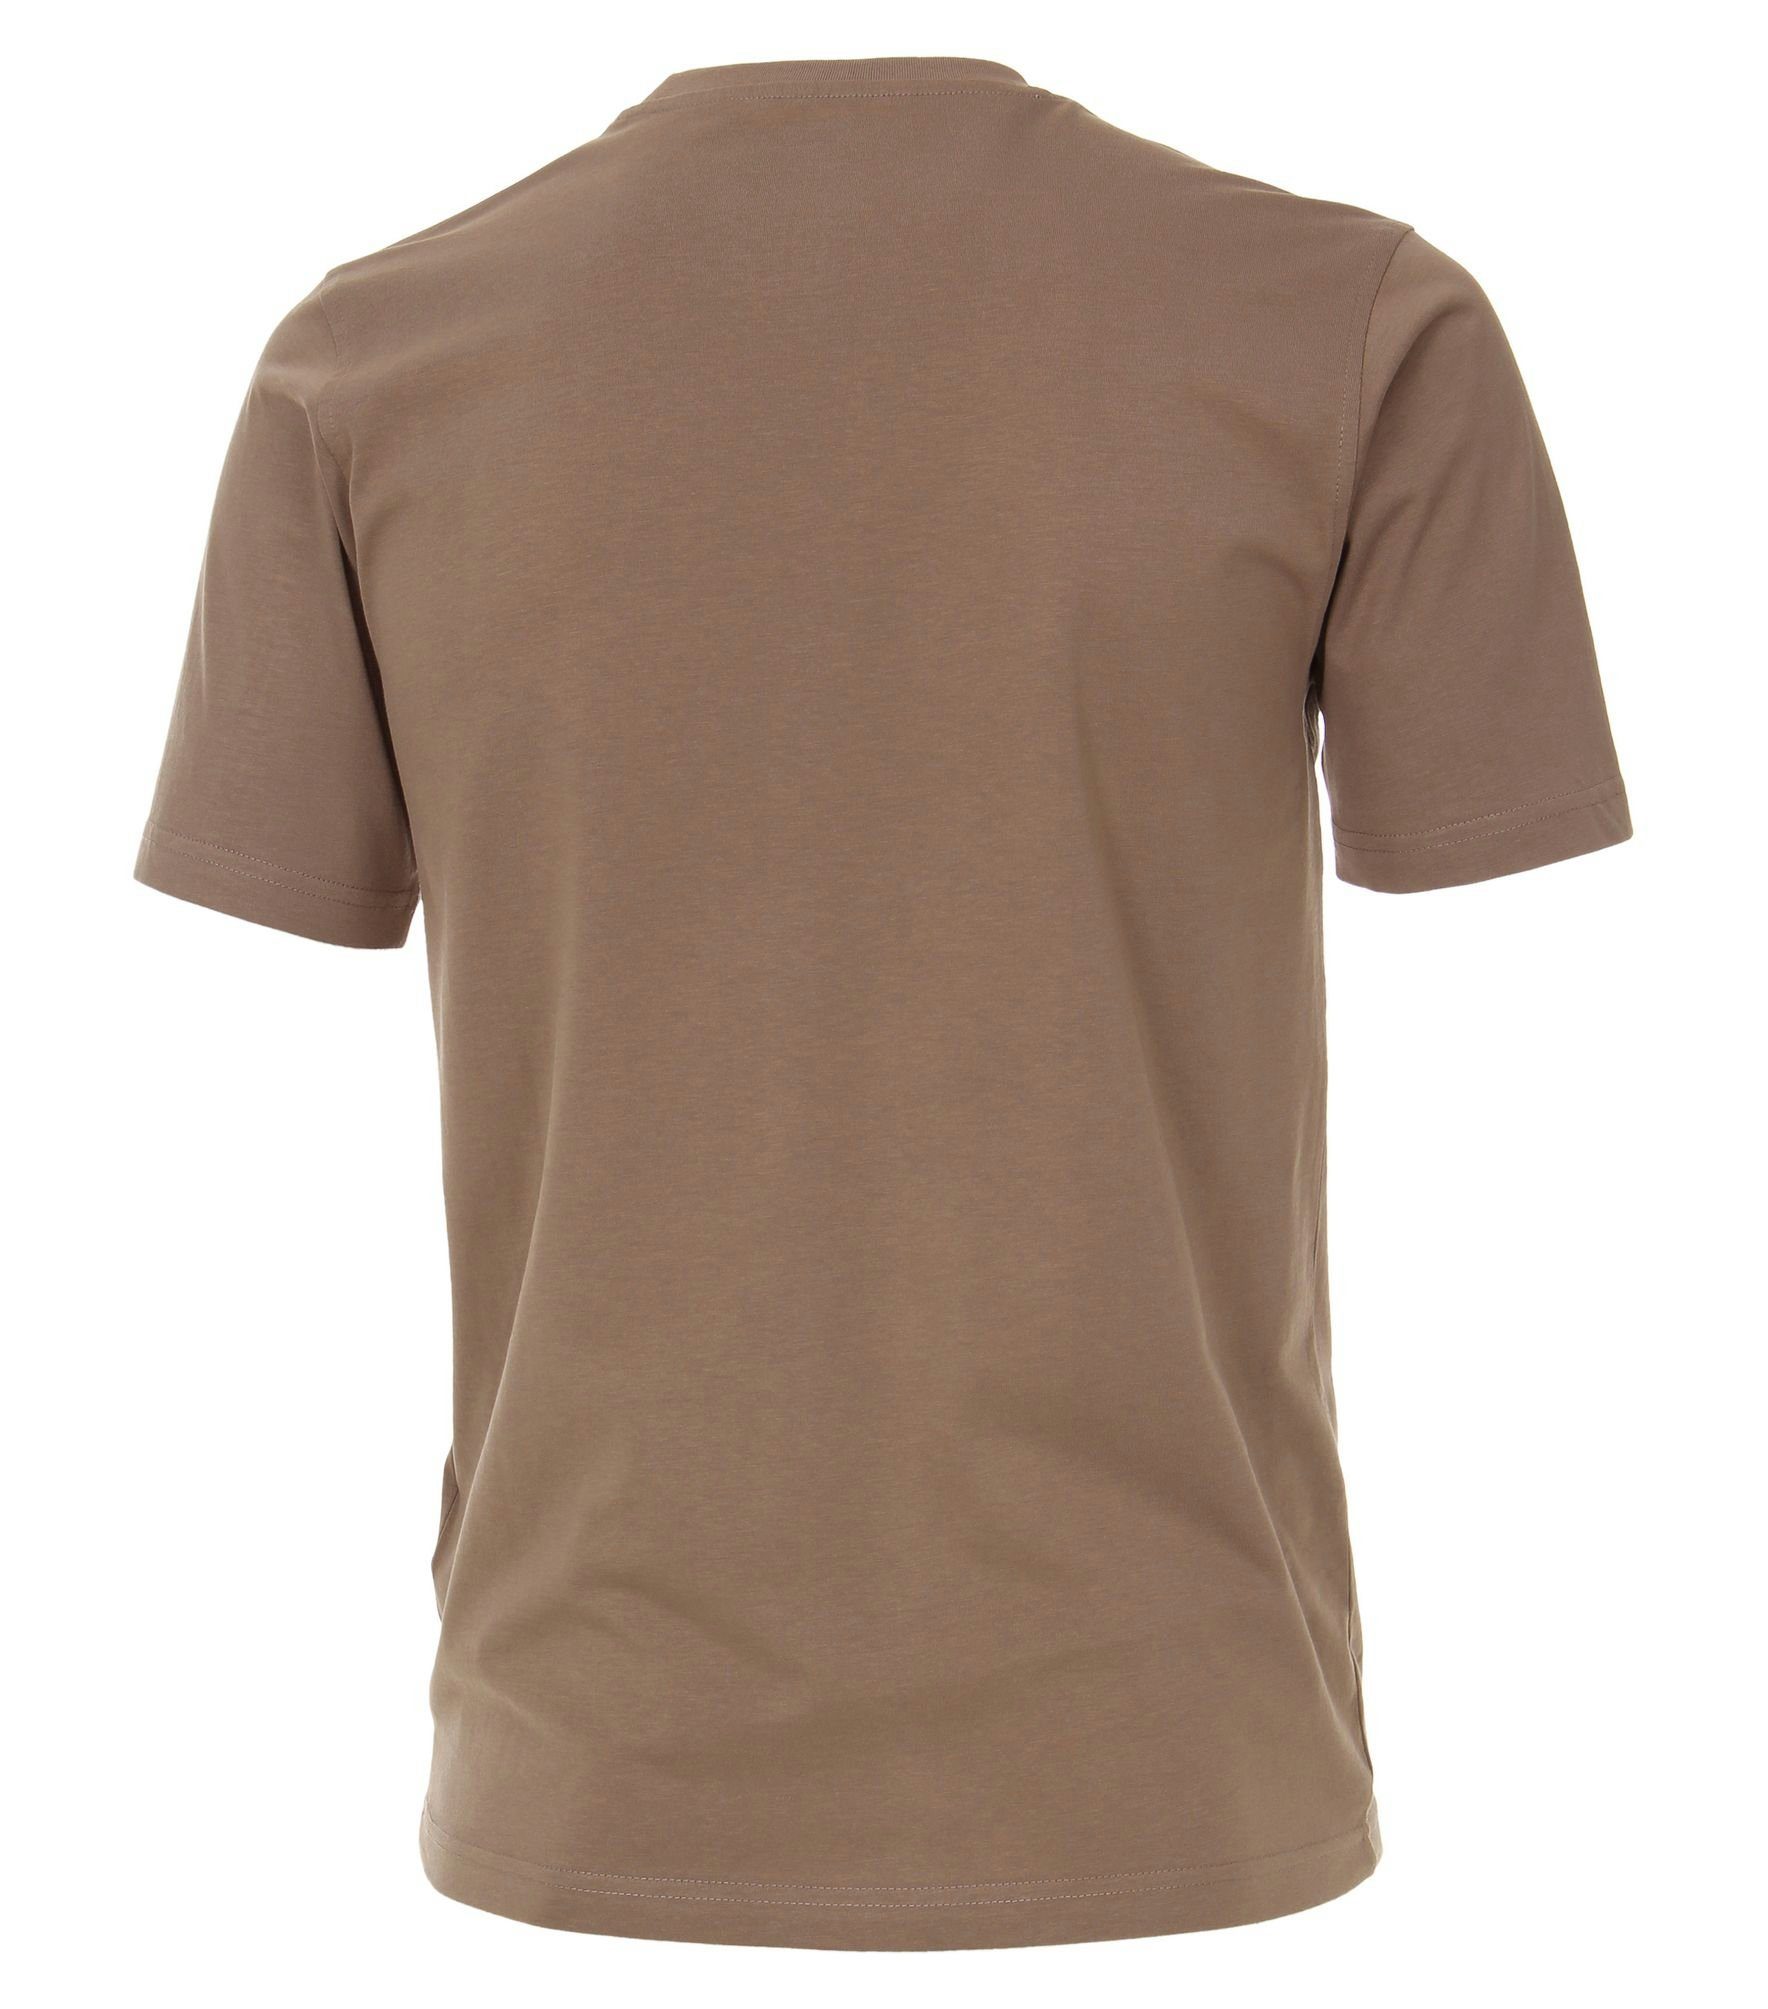 CASAMODA T-Shirt unifarben 004200 beige T-Shirt (625)